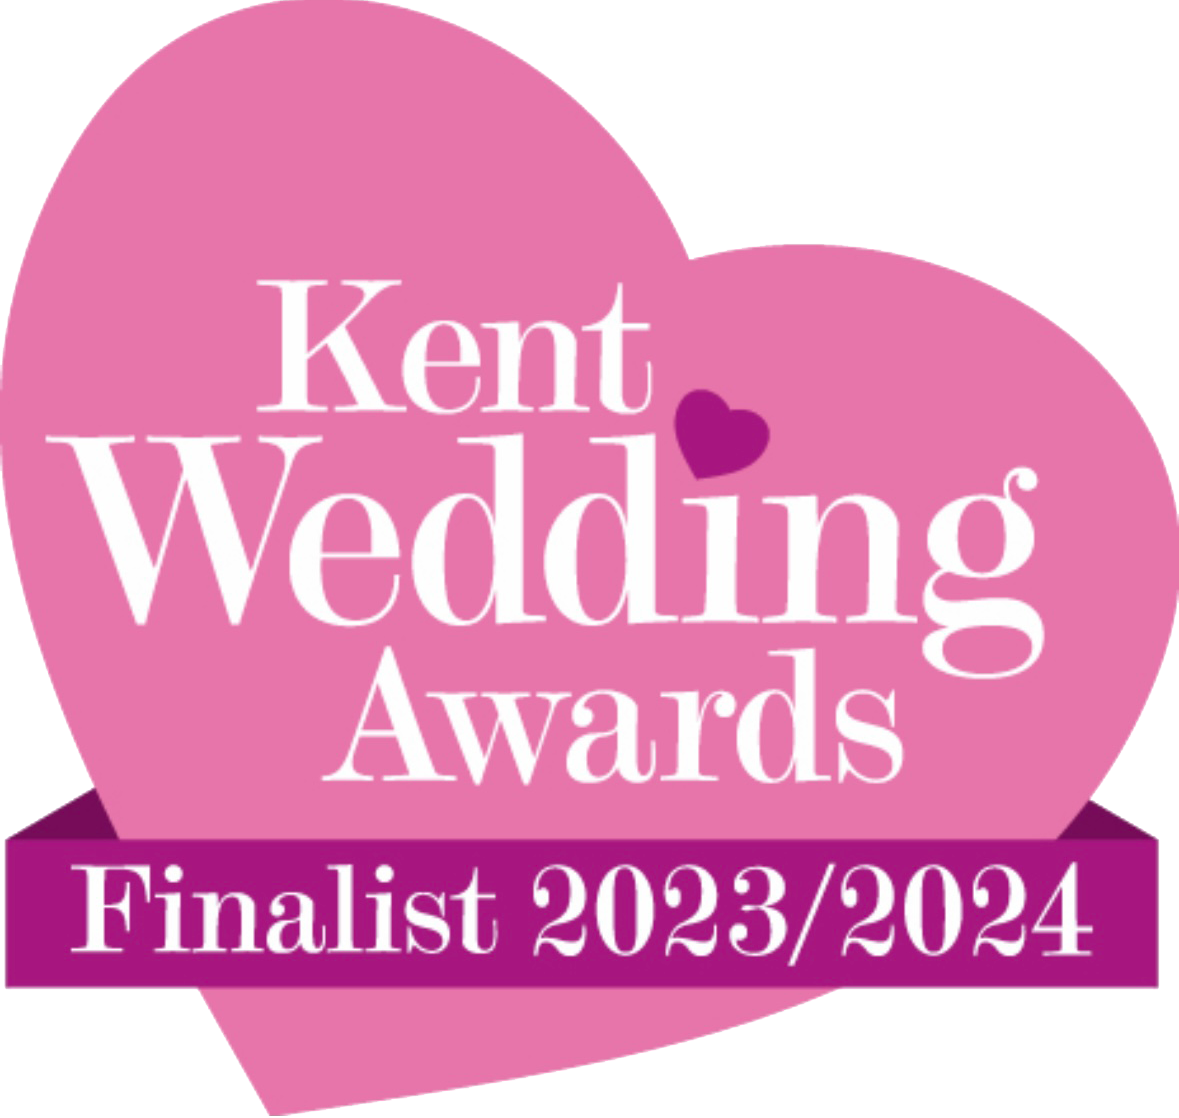 Kent Wedding Awards 2023 2024 Finalist